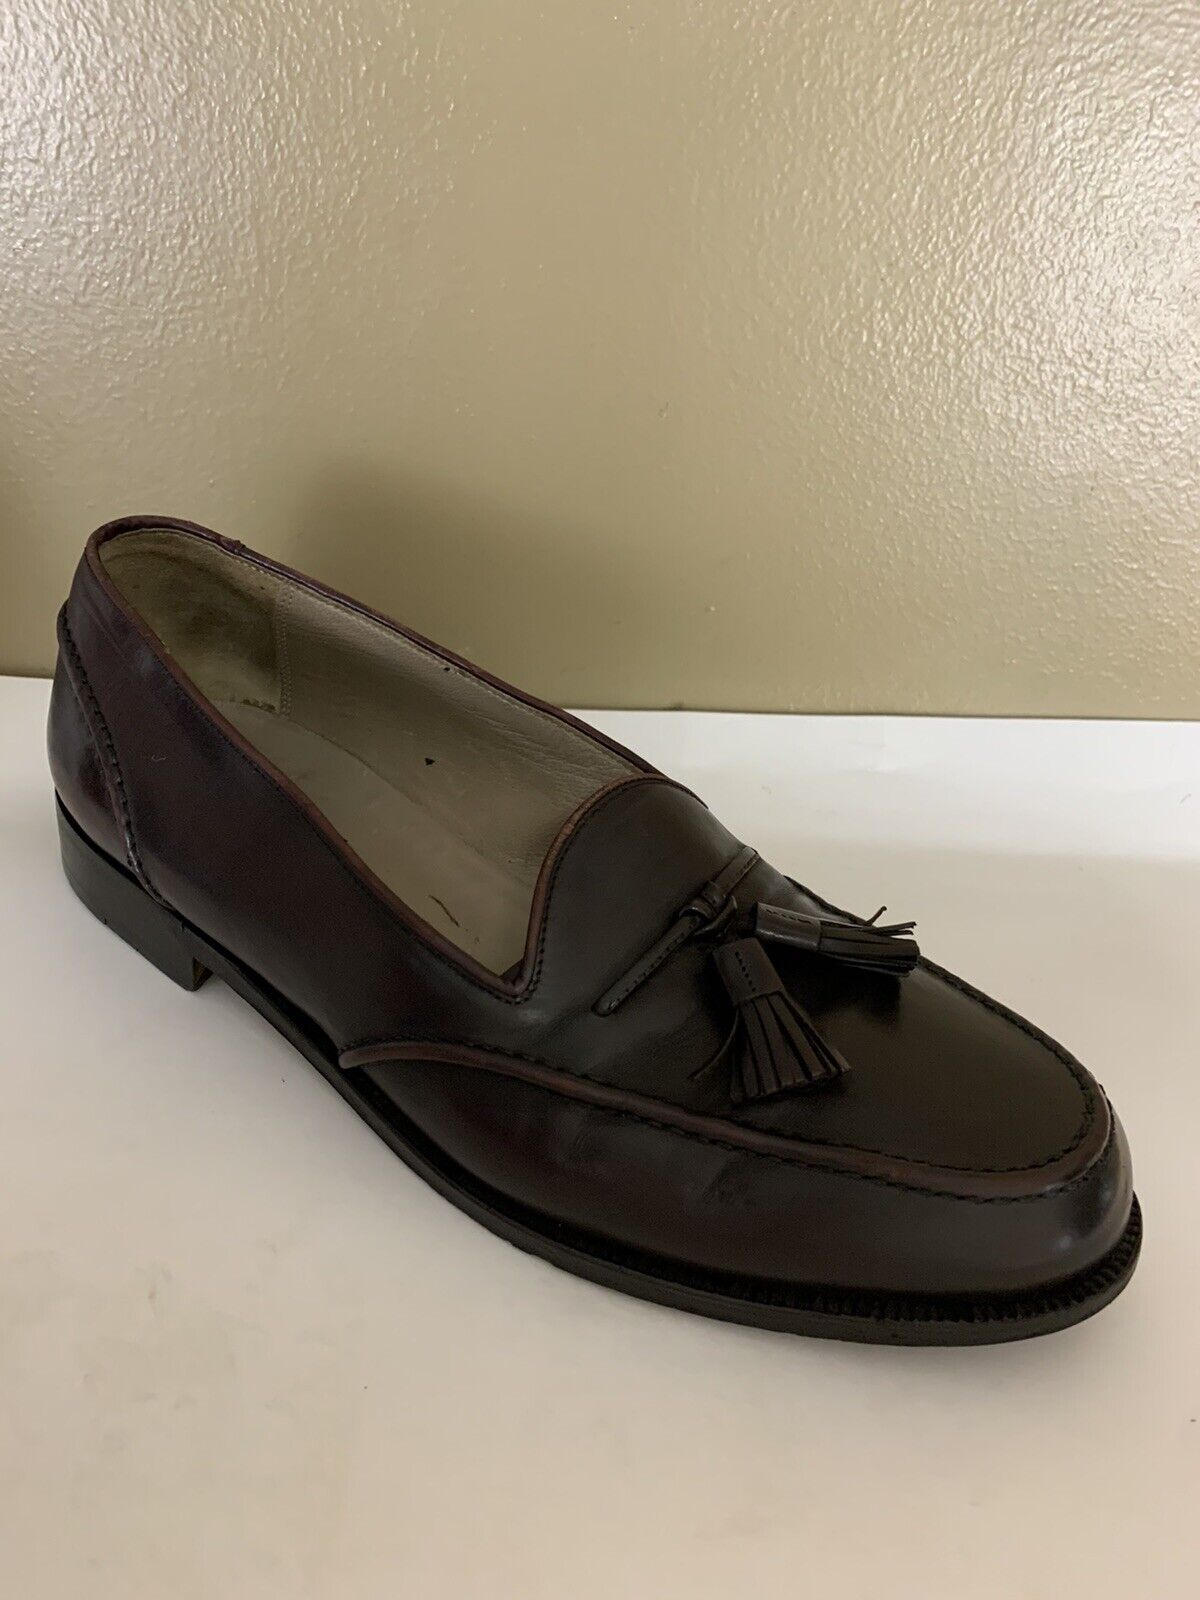 Bally DELGA Mens Size 9.5 D Dark Brown Tassel Loafers Slip On Shoes